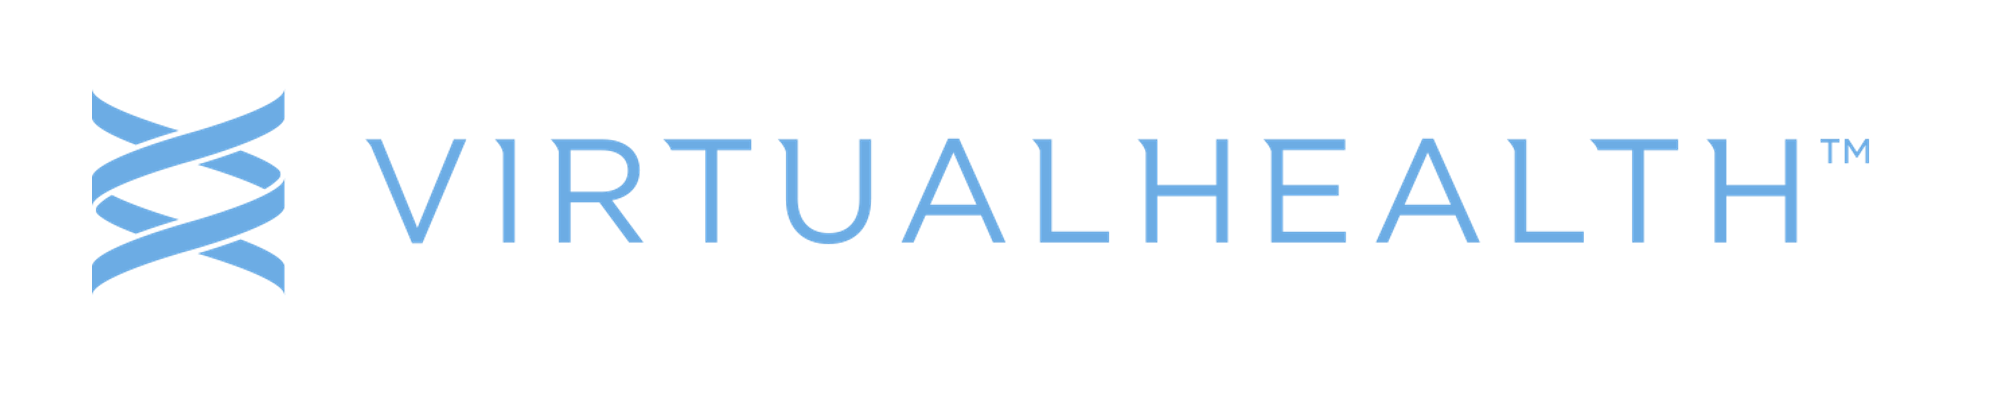 VirtualHealth Banner